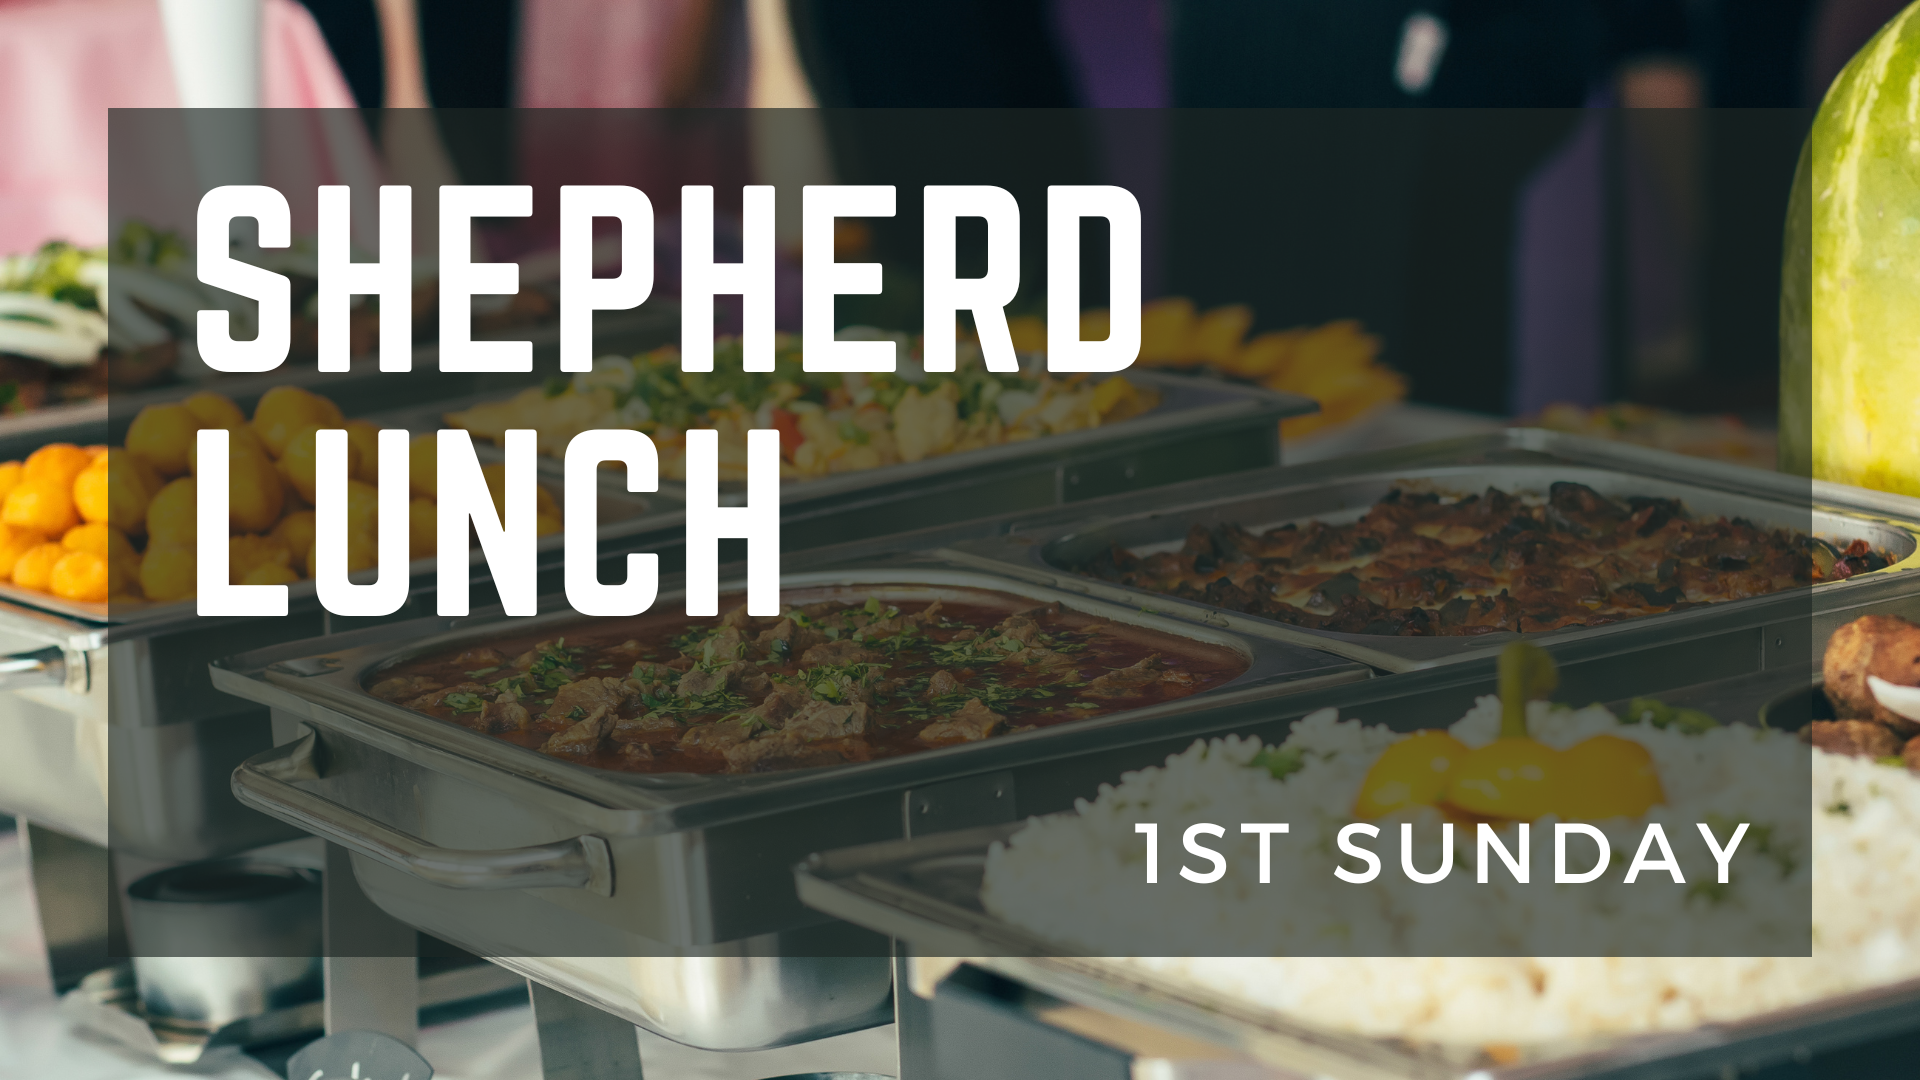 1st Sunday Shepherd Lunch, Sunset Church, Springfield MO